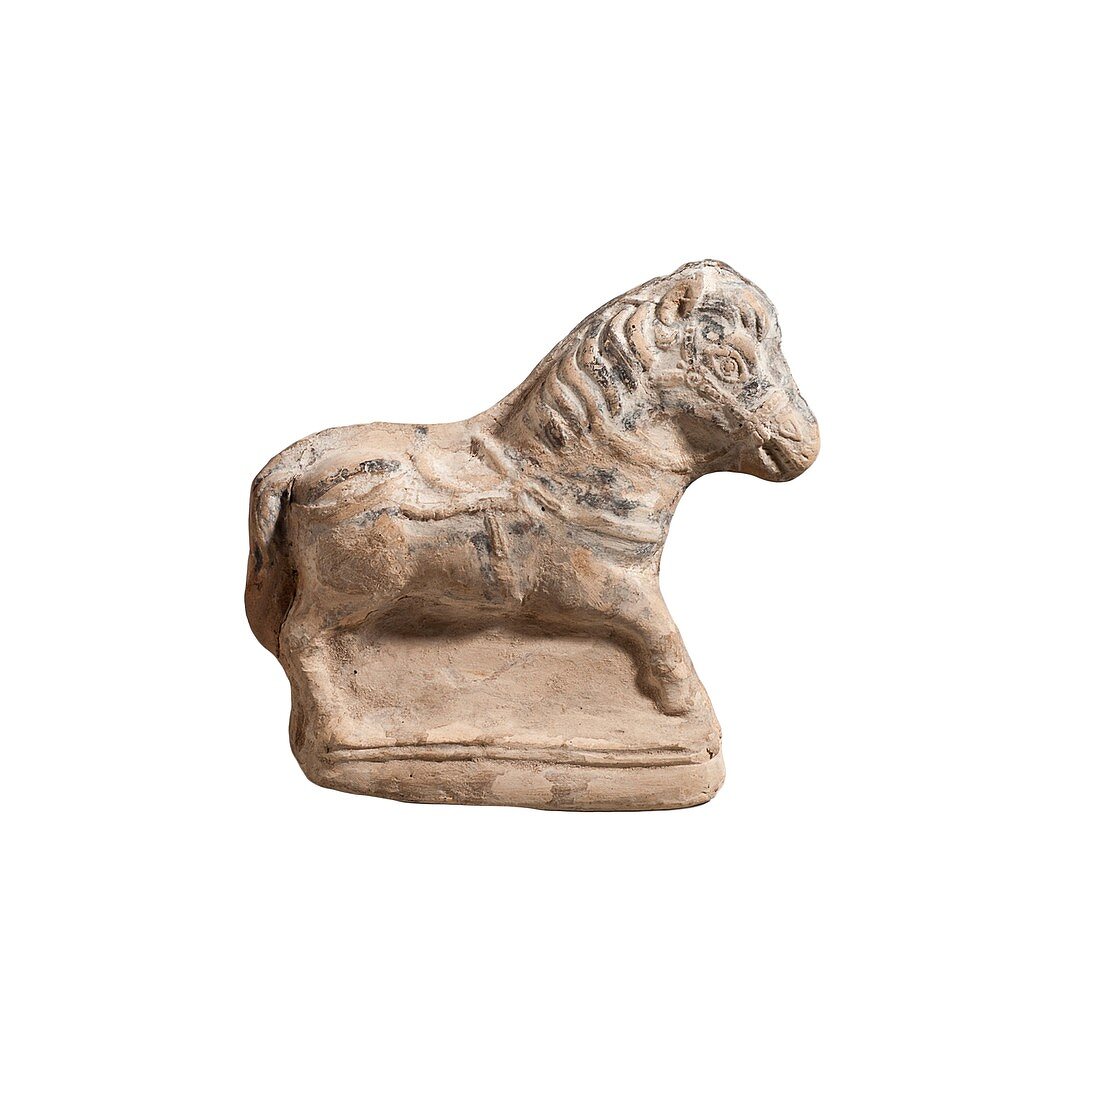 Beit Natif type horse figurine